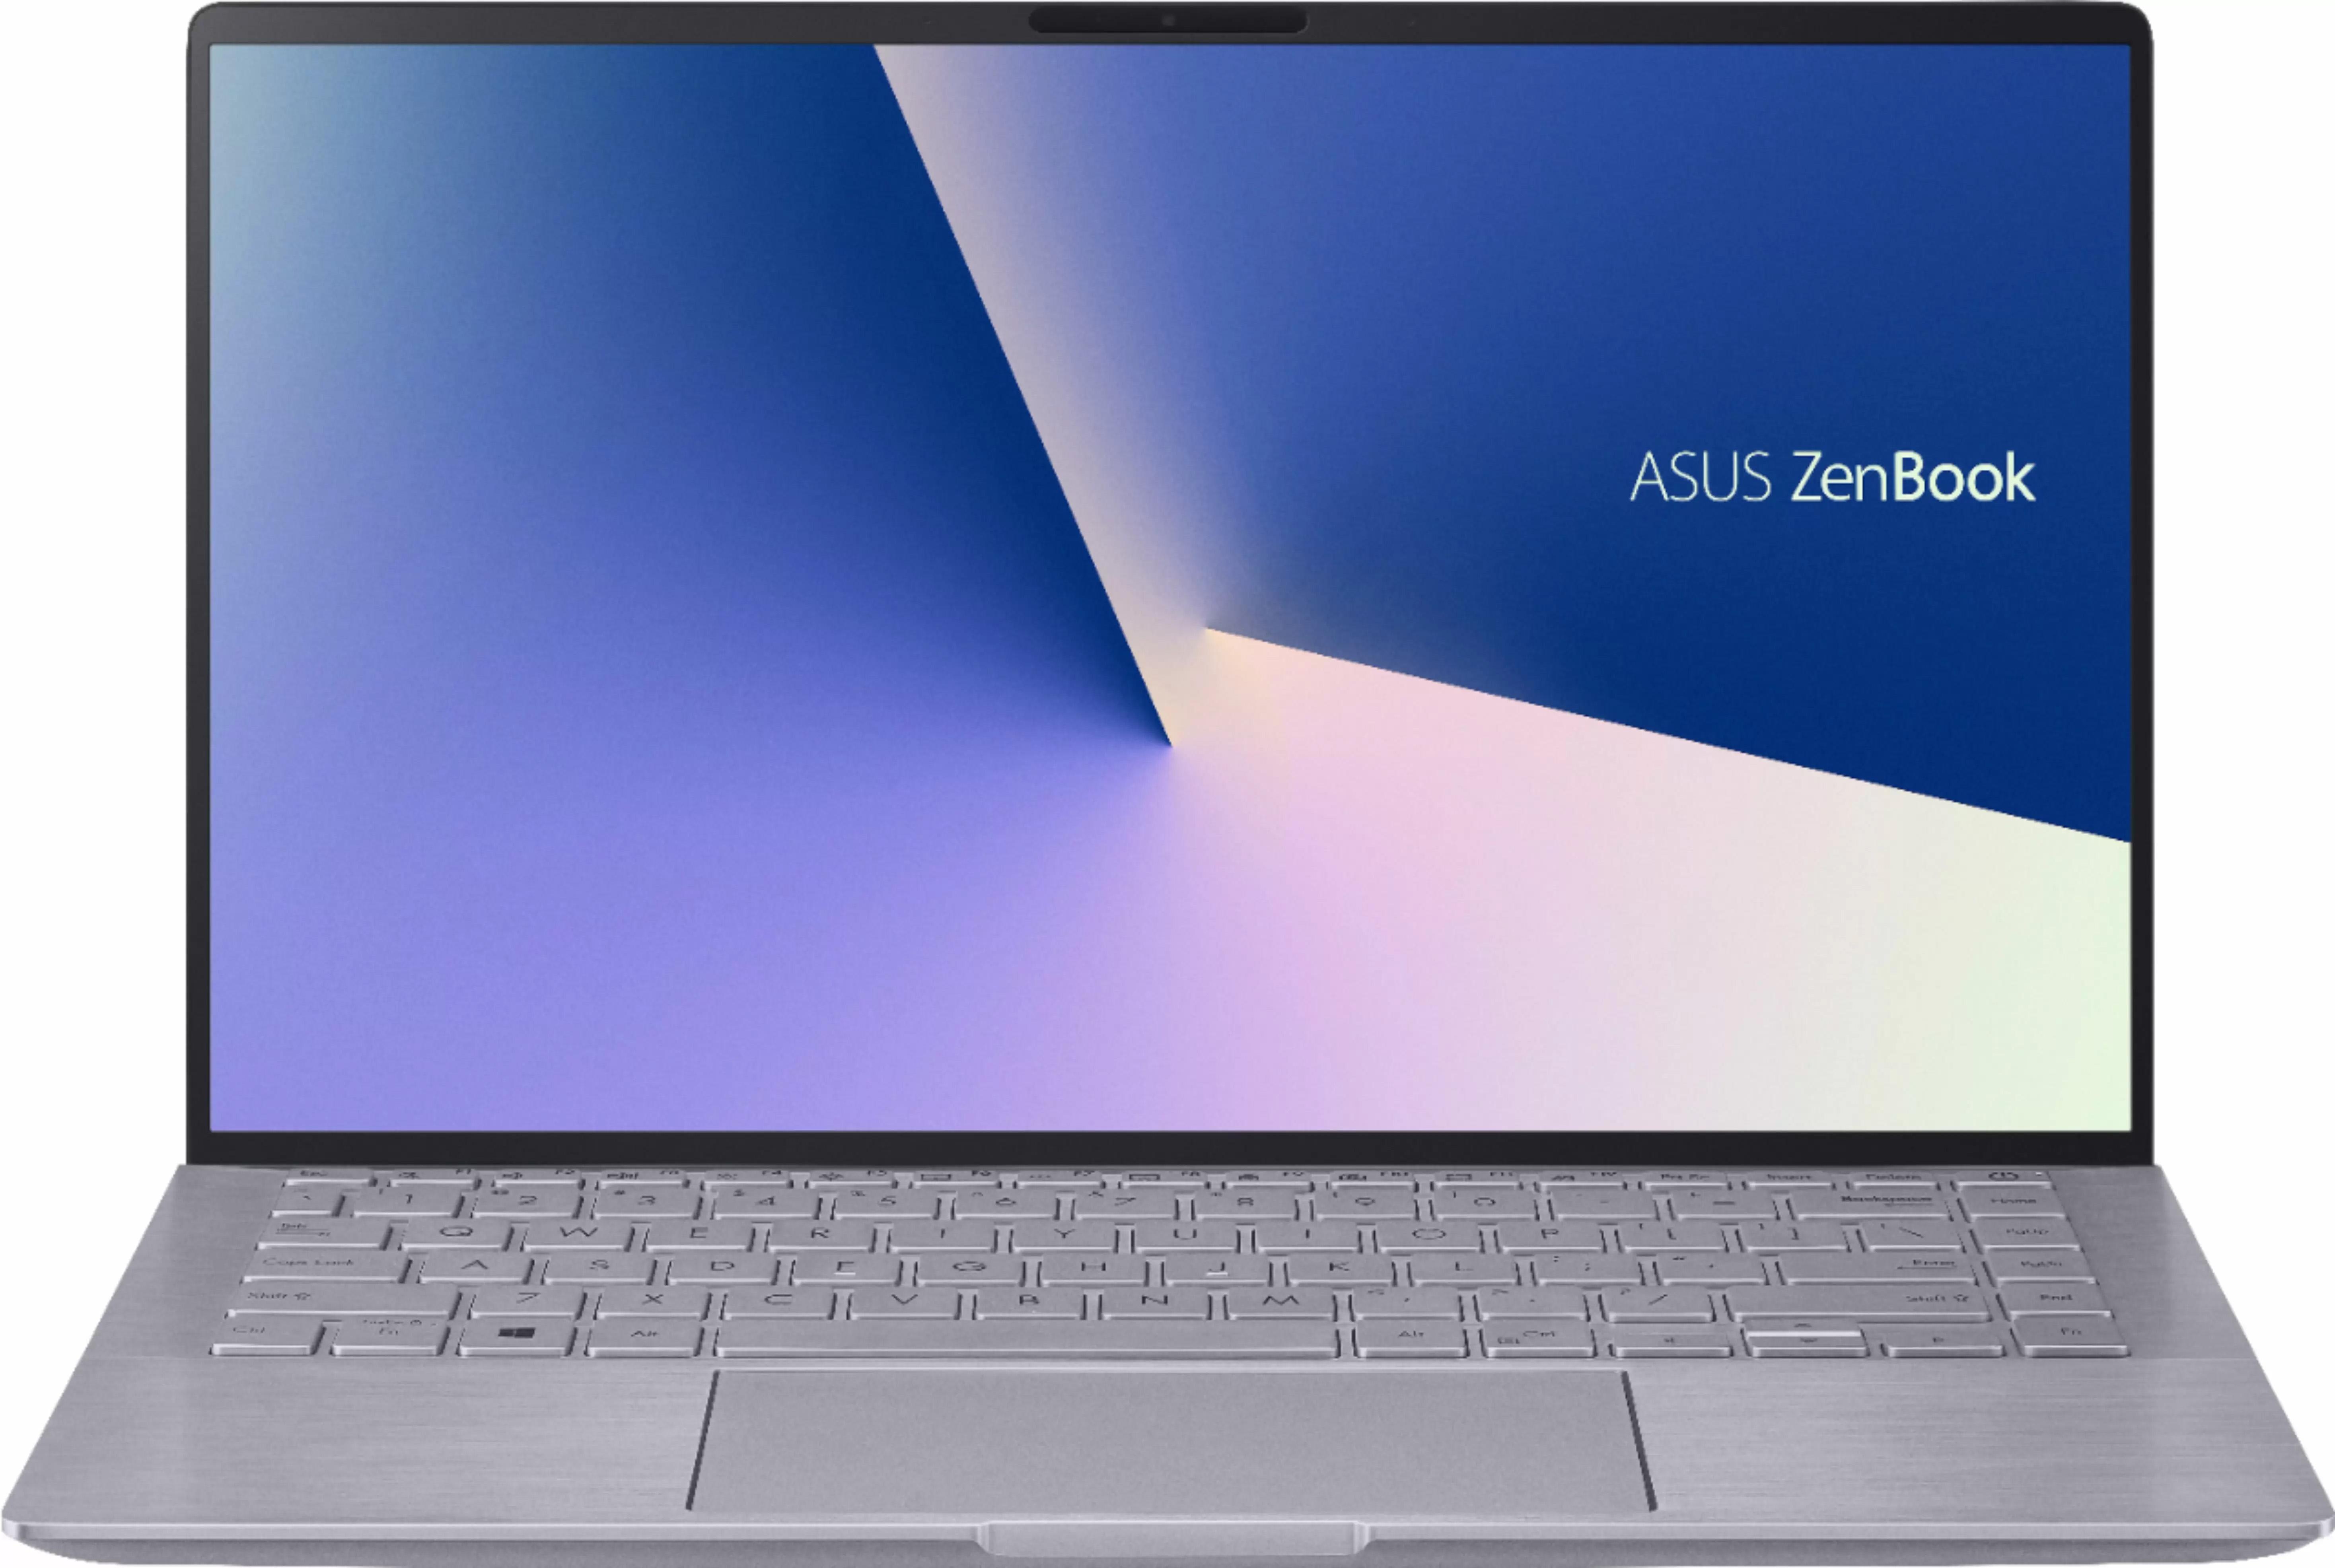 Asus ZenBook 14in AMD Ryzen 5 8GB Notebook Laptop for $499.99 Shipped